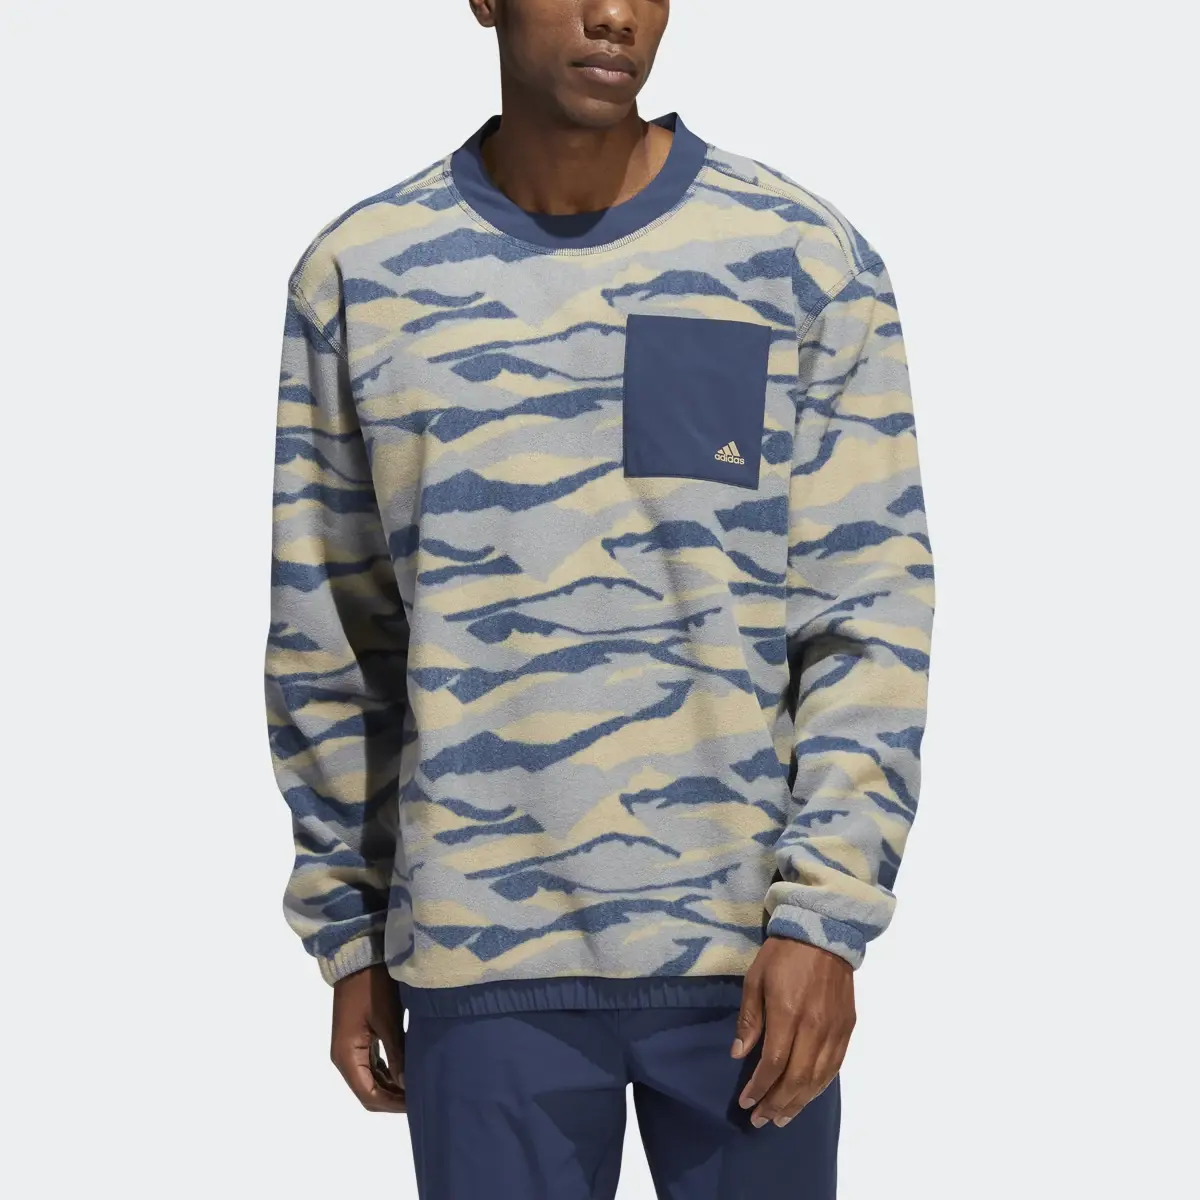 Adidas Texture-Print Crew Sweatshirt. 1